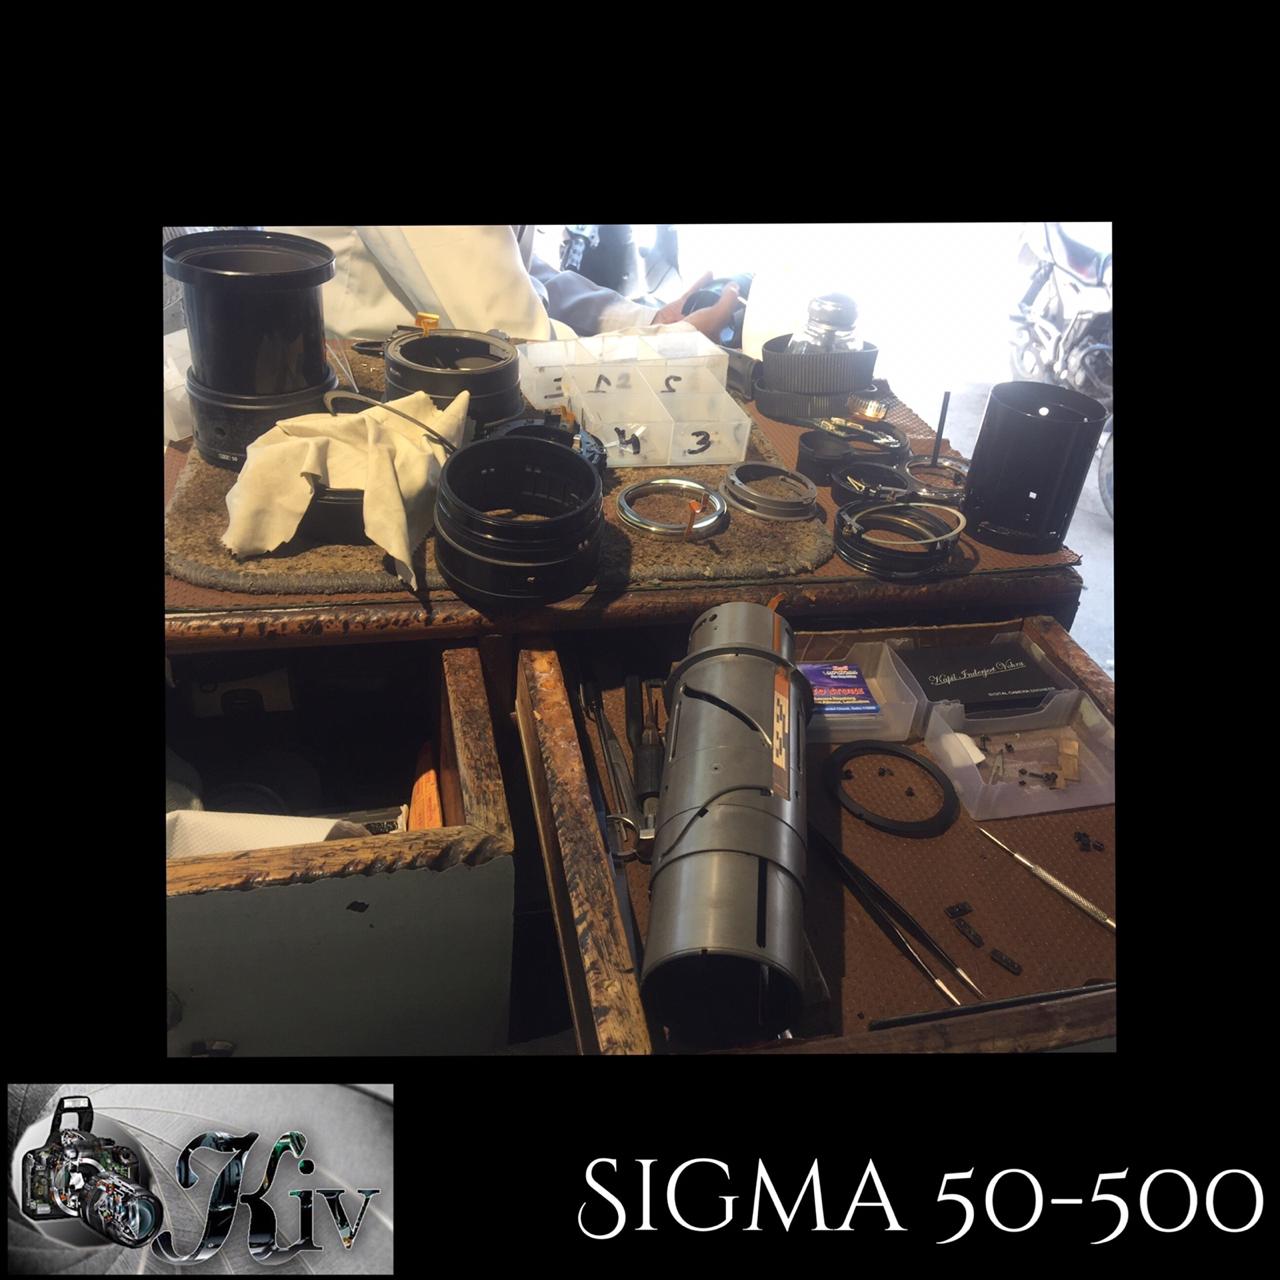 Sigma 50-500 mm telephoto lens